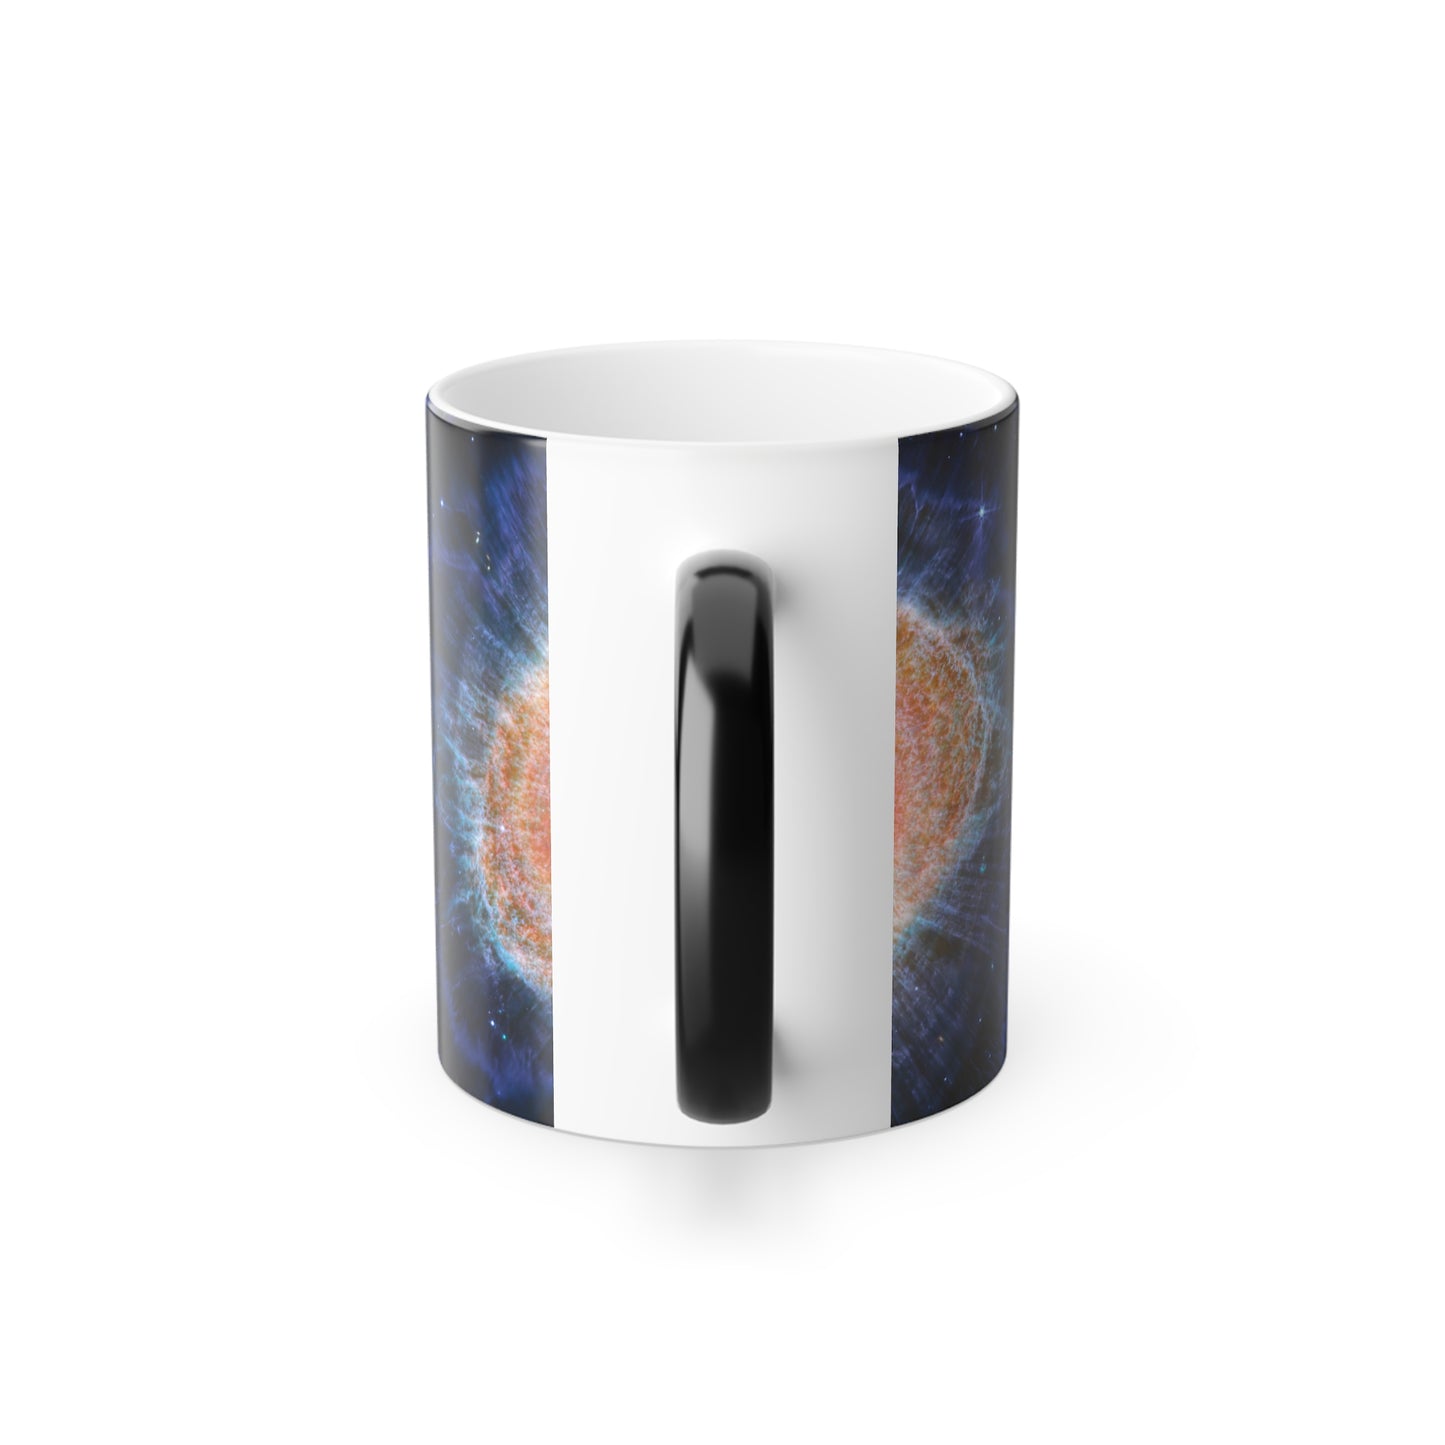 Magical Mug: Cosmos 17 Reveals the Universe with Heat, 11oz